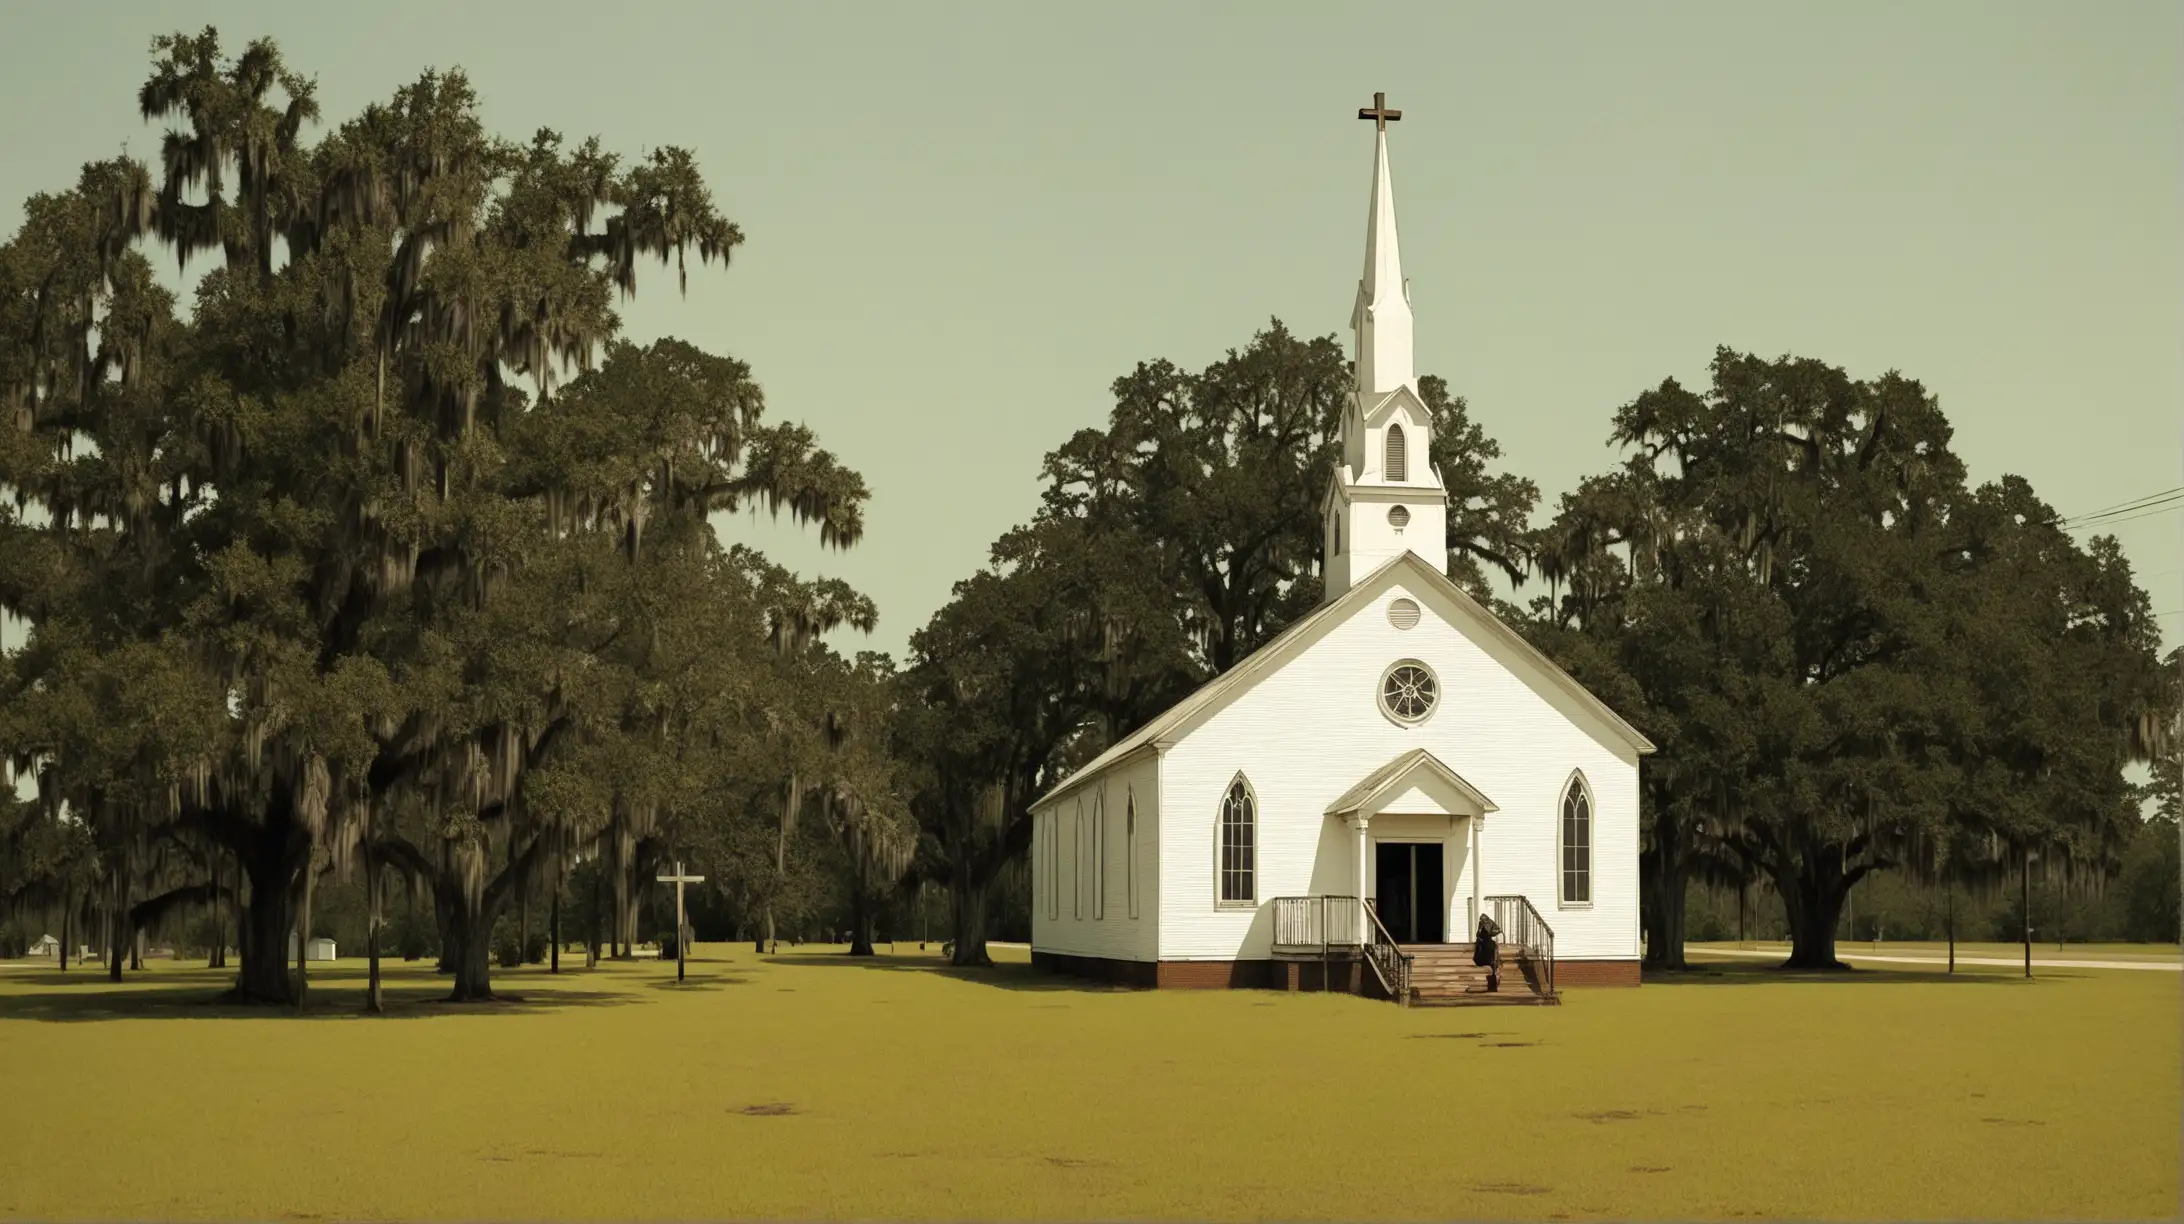 Louisiana Gospel Church Amidst Vibrant Landscape Colorful Scene of Spiritual Worship